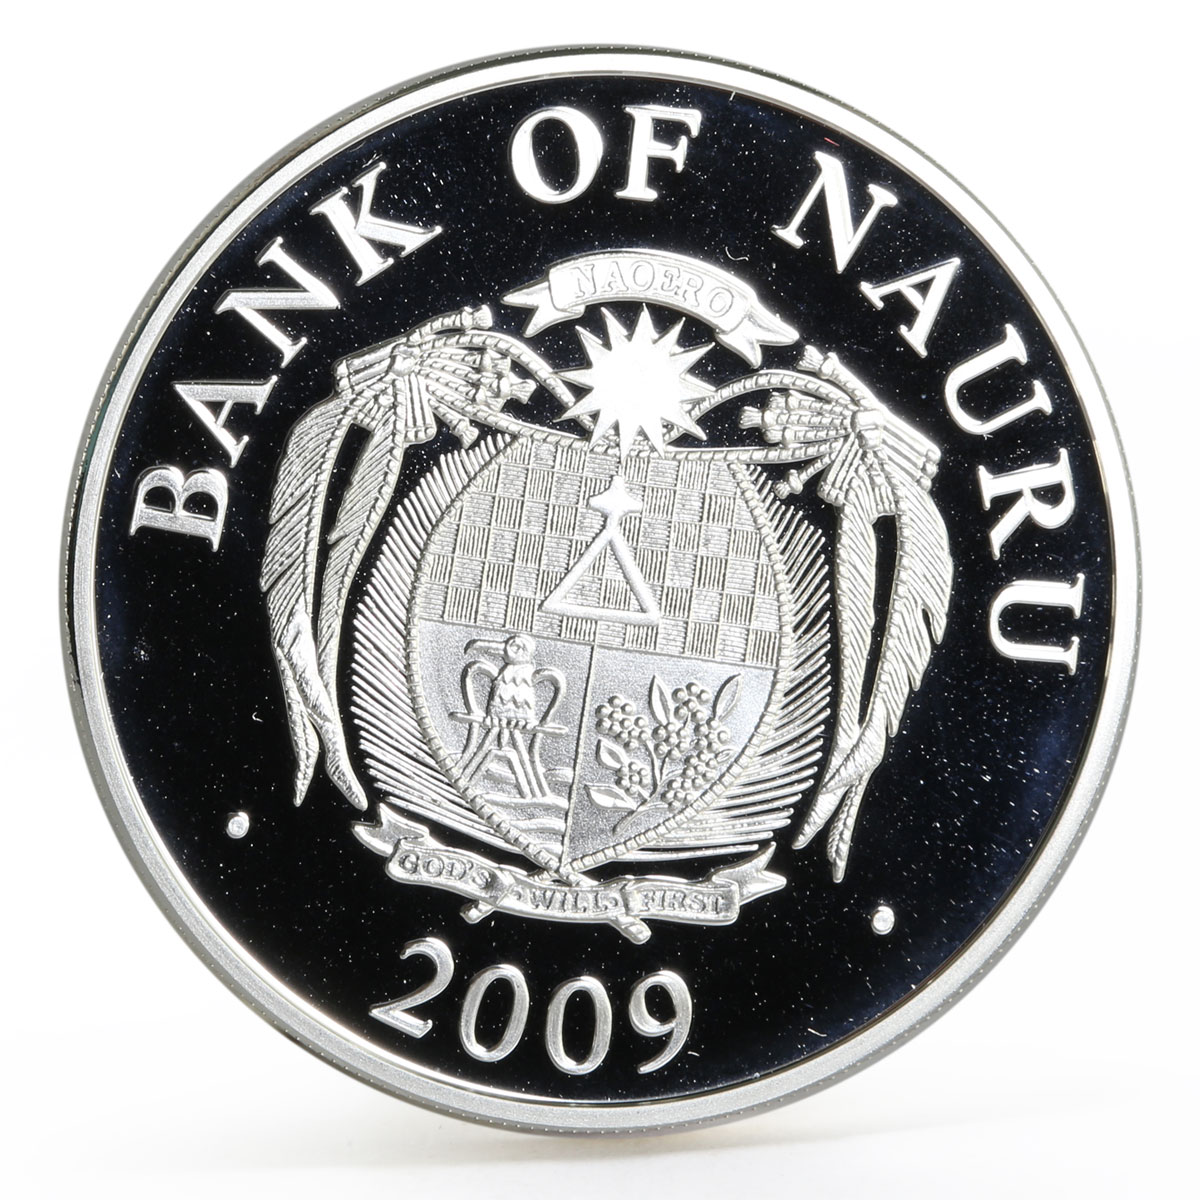 Nauru 10 dollars London Olympic Games series Swimming proof silver coin 2009